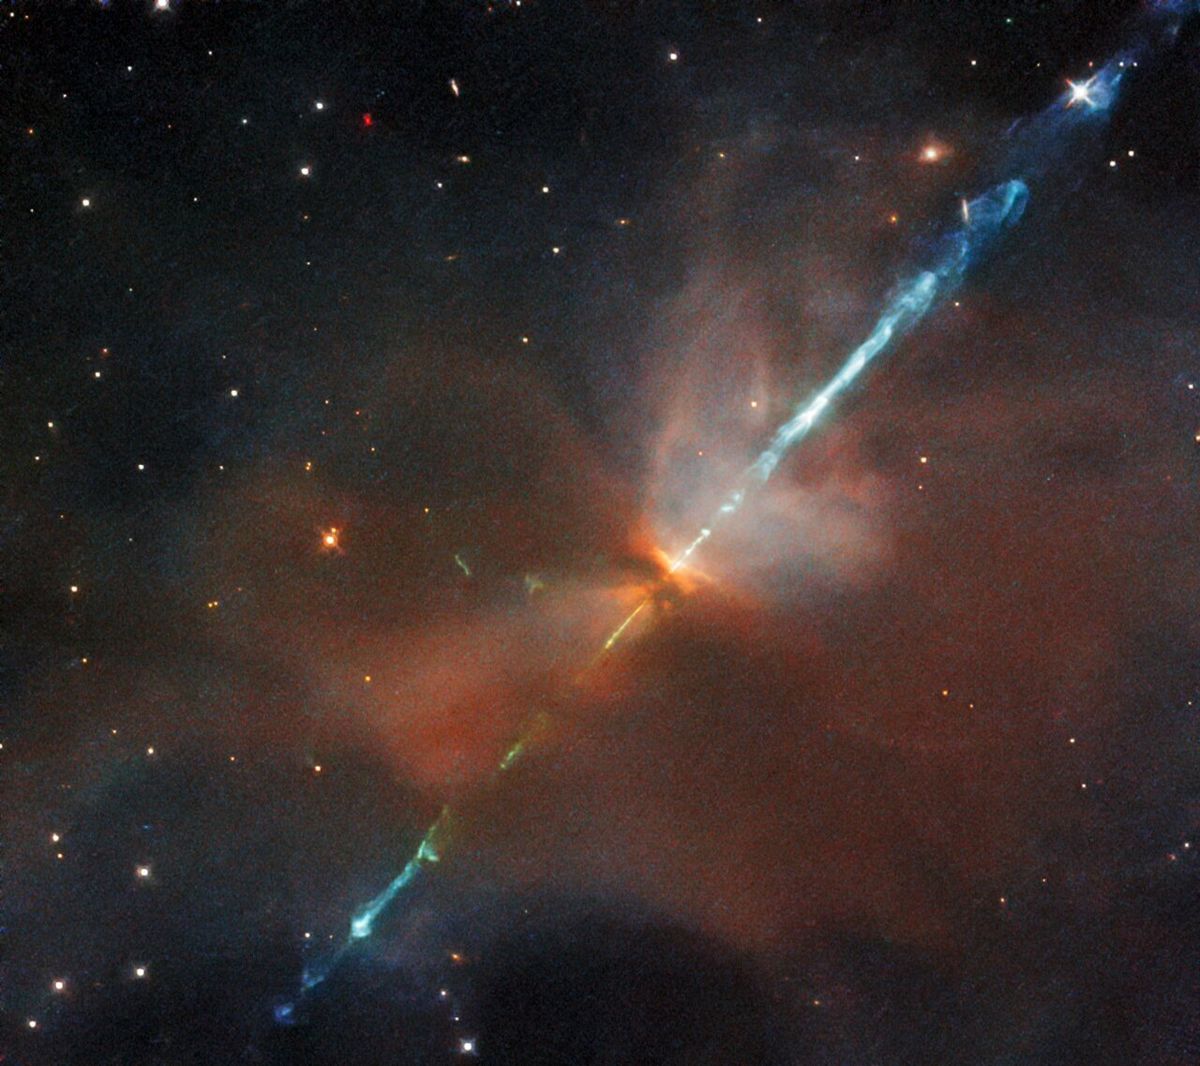 Amazing Hubble telescope photo shows space 'sword' piercing huge celestial 'heart'